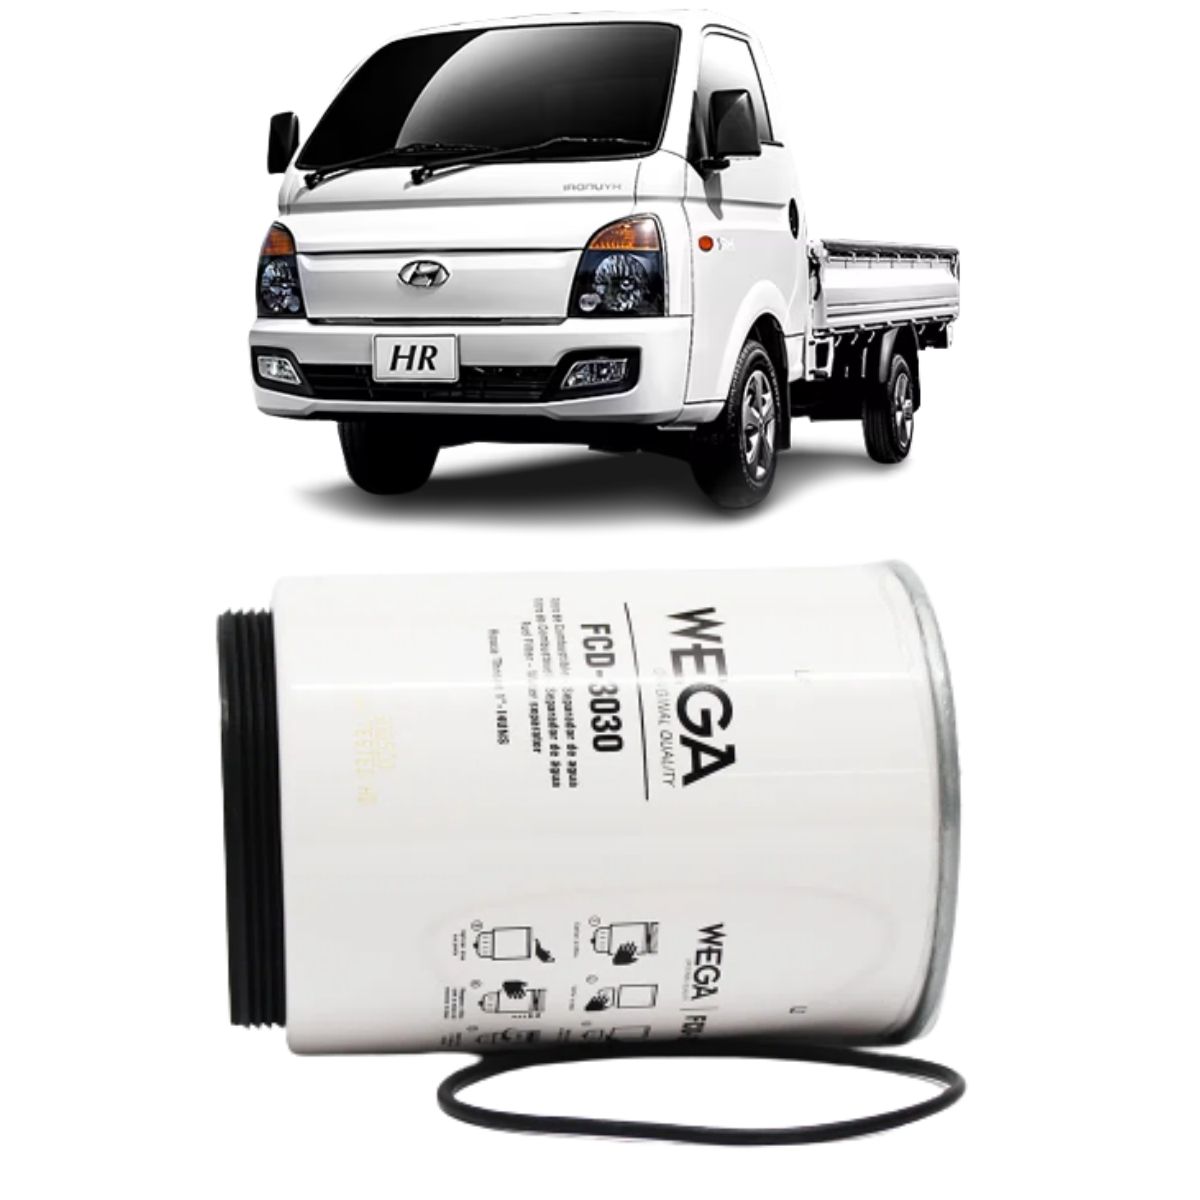 Filtro Combustivel Hyundai Hr 2.5 A Partir De 2019 Diesel Wega Fcd3030